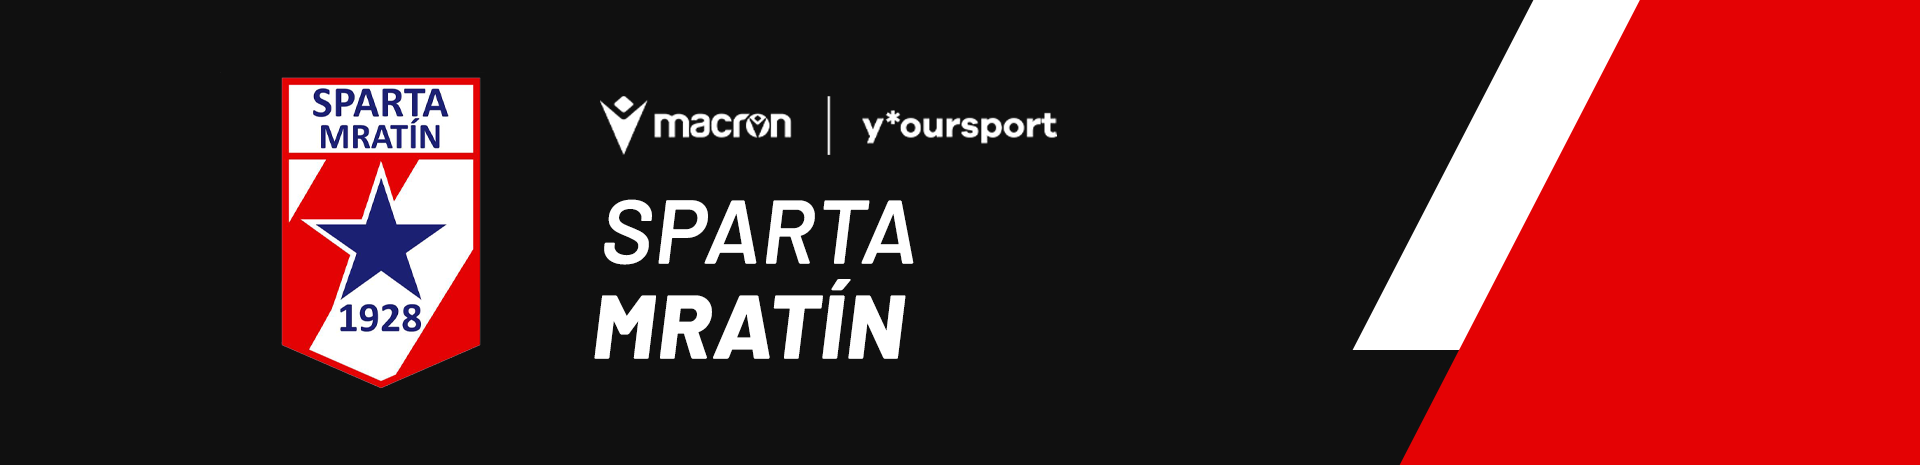 Sparta Mratín desktop